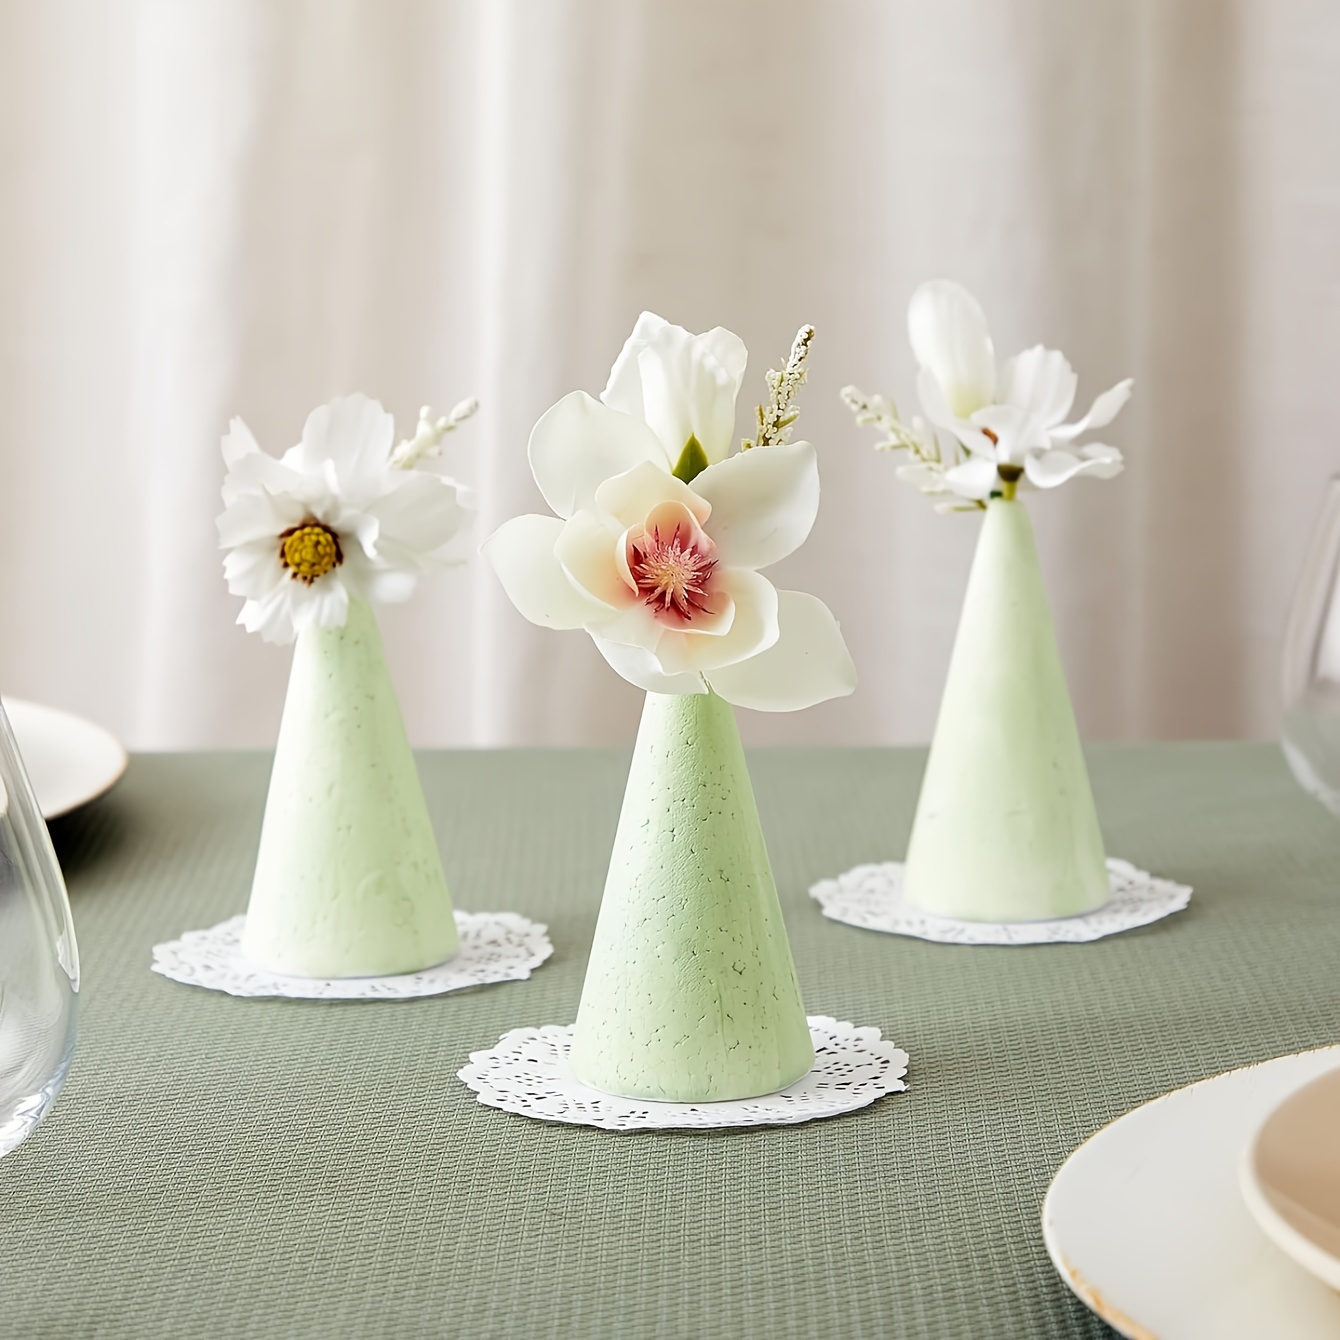  MILISTEN 2Pcs Craft Foam Cone White Foam Cones for DIY Home  Arts Craft Project Christmas Tree Table Centerpiece Floral Arrangements  38x13.5cm (White) : Arts, Crafts & Sewing